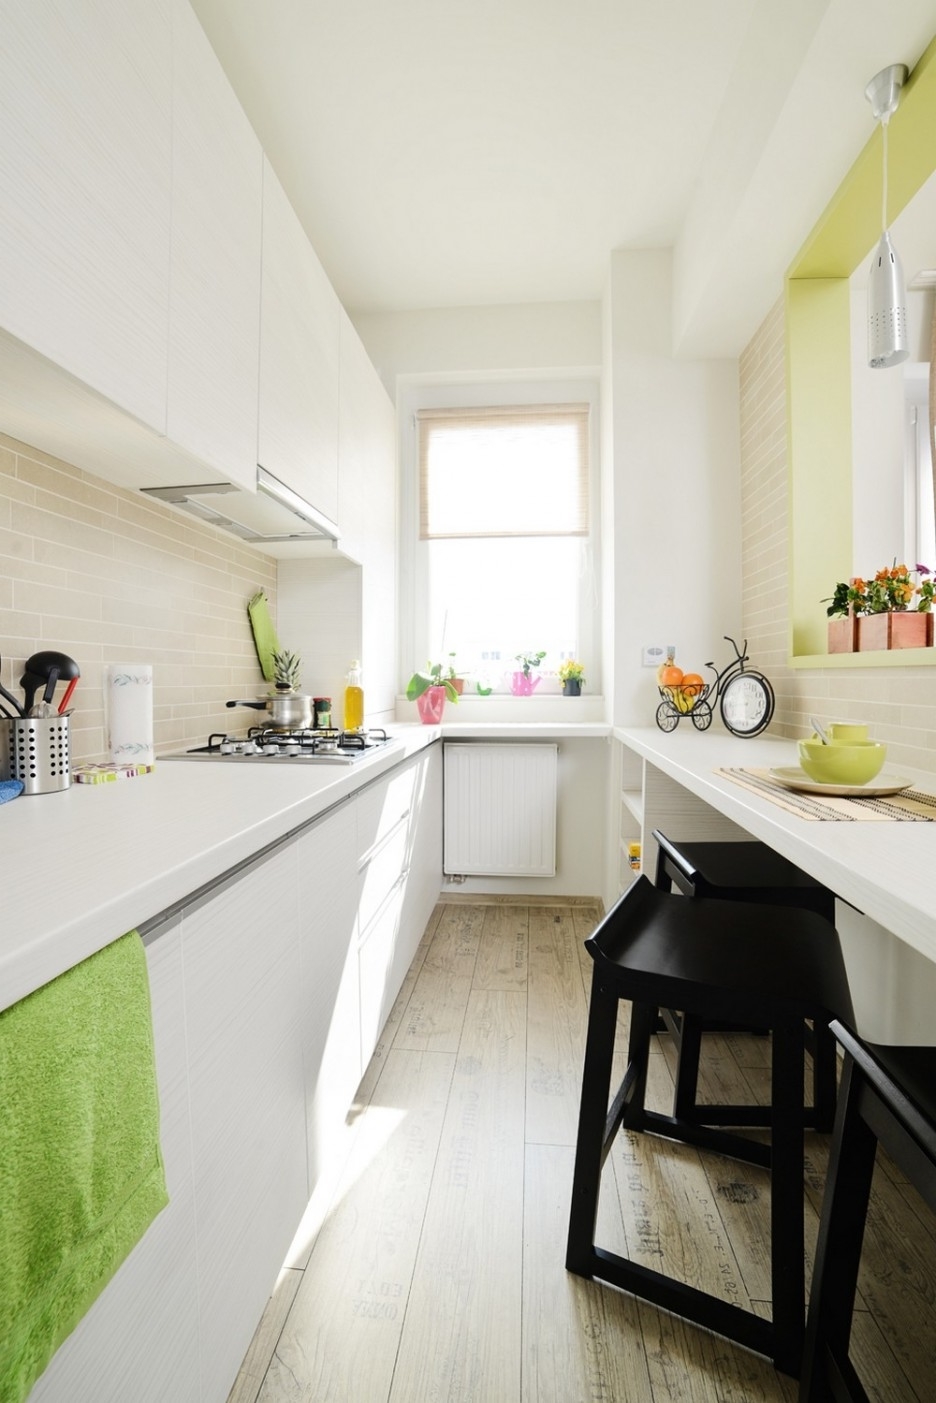 Best Small Window For Small Kitchen In Contemporary Design With Wooden Flooring Kitchen Backsplash Glass Tile Design Ideas White Kitchen Cabinet Design Kitchen Island Ideas Kitchen Designs